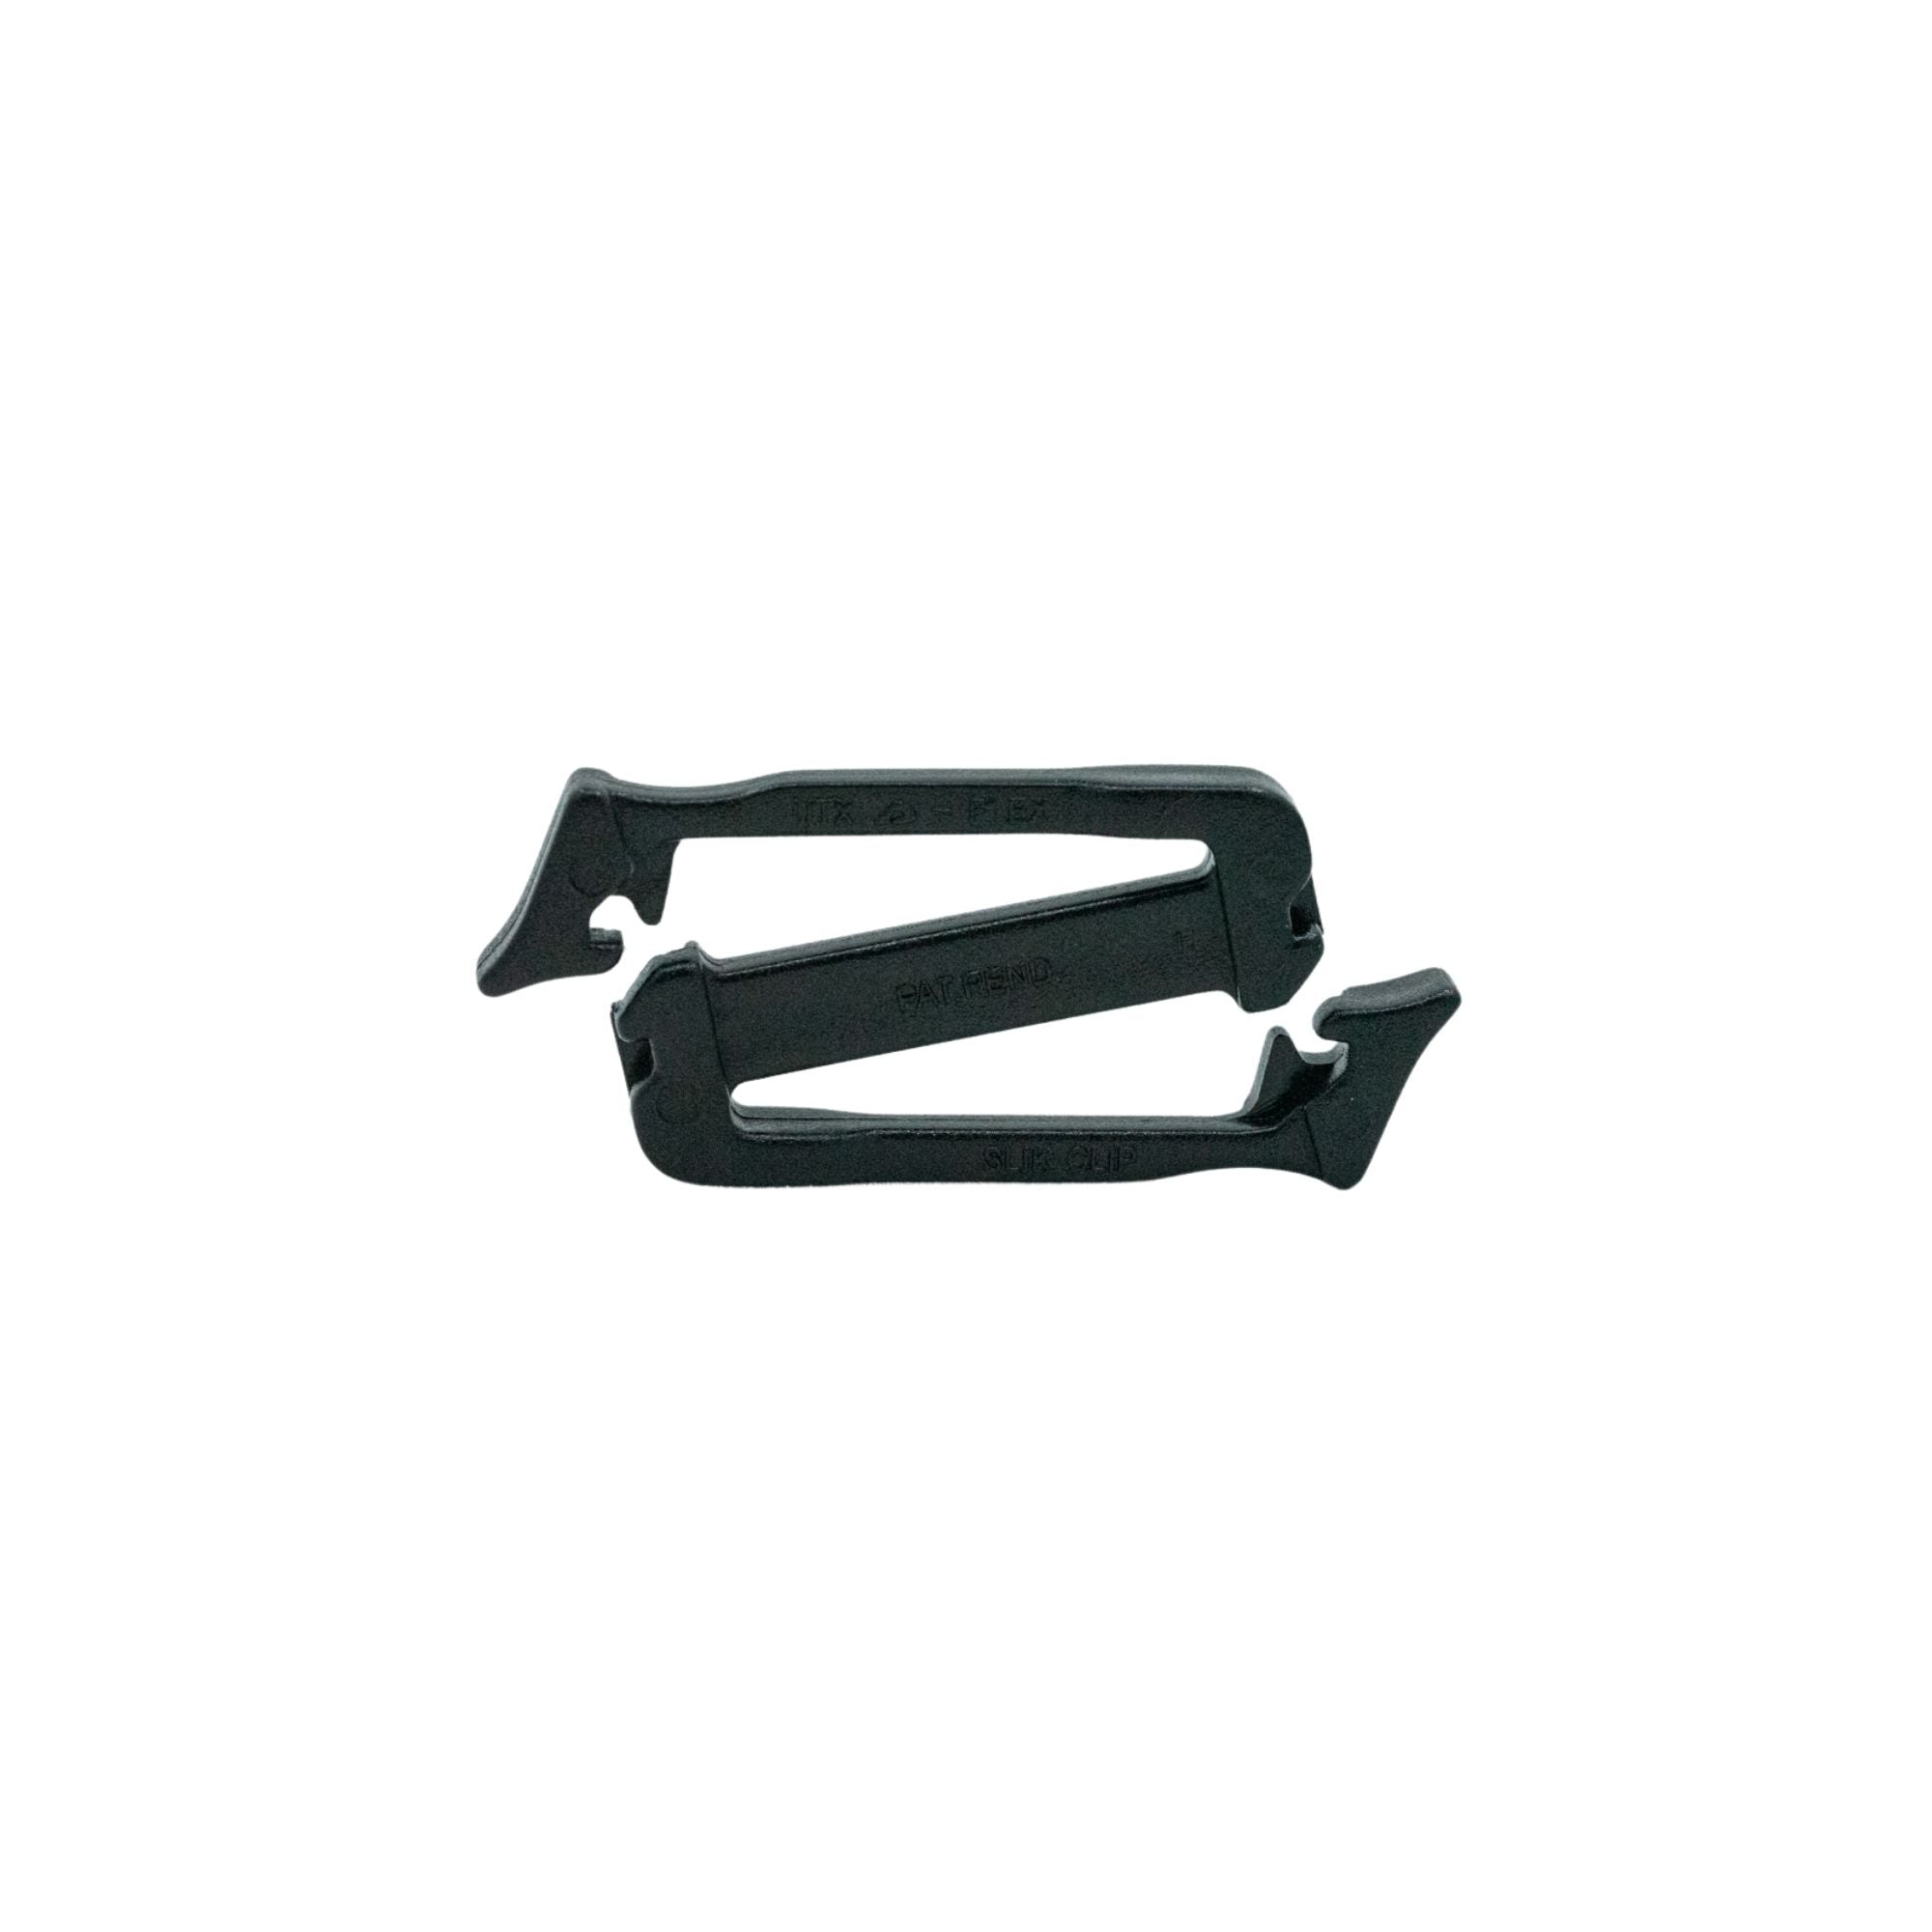 Bartact PALS/MOLLE Siamese Slik Clip Field Repair Buckle Kit 1 inch 10 Pack